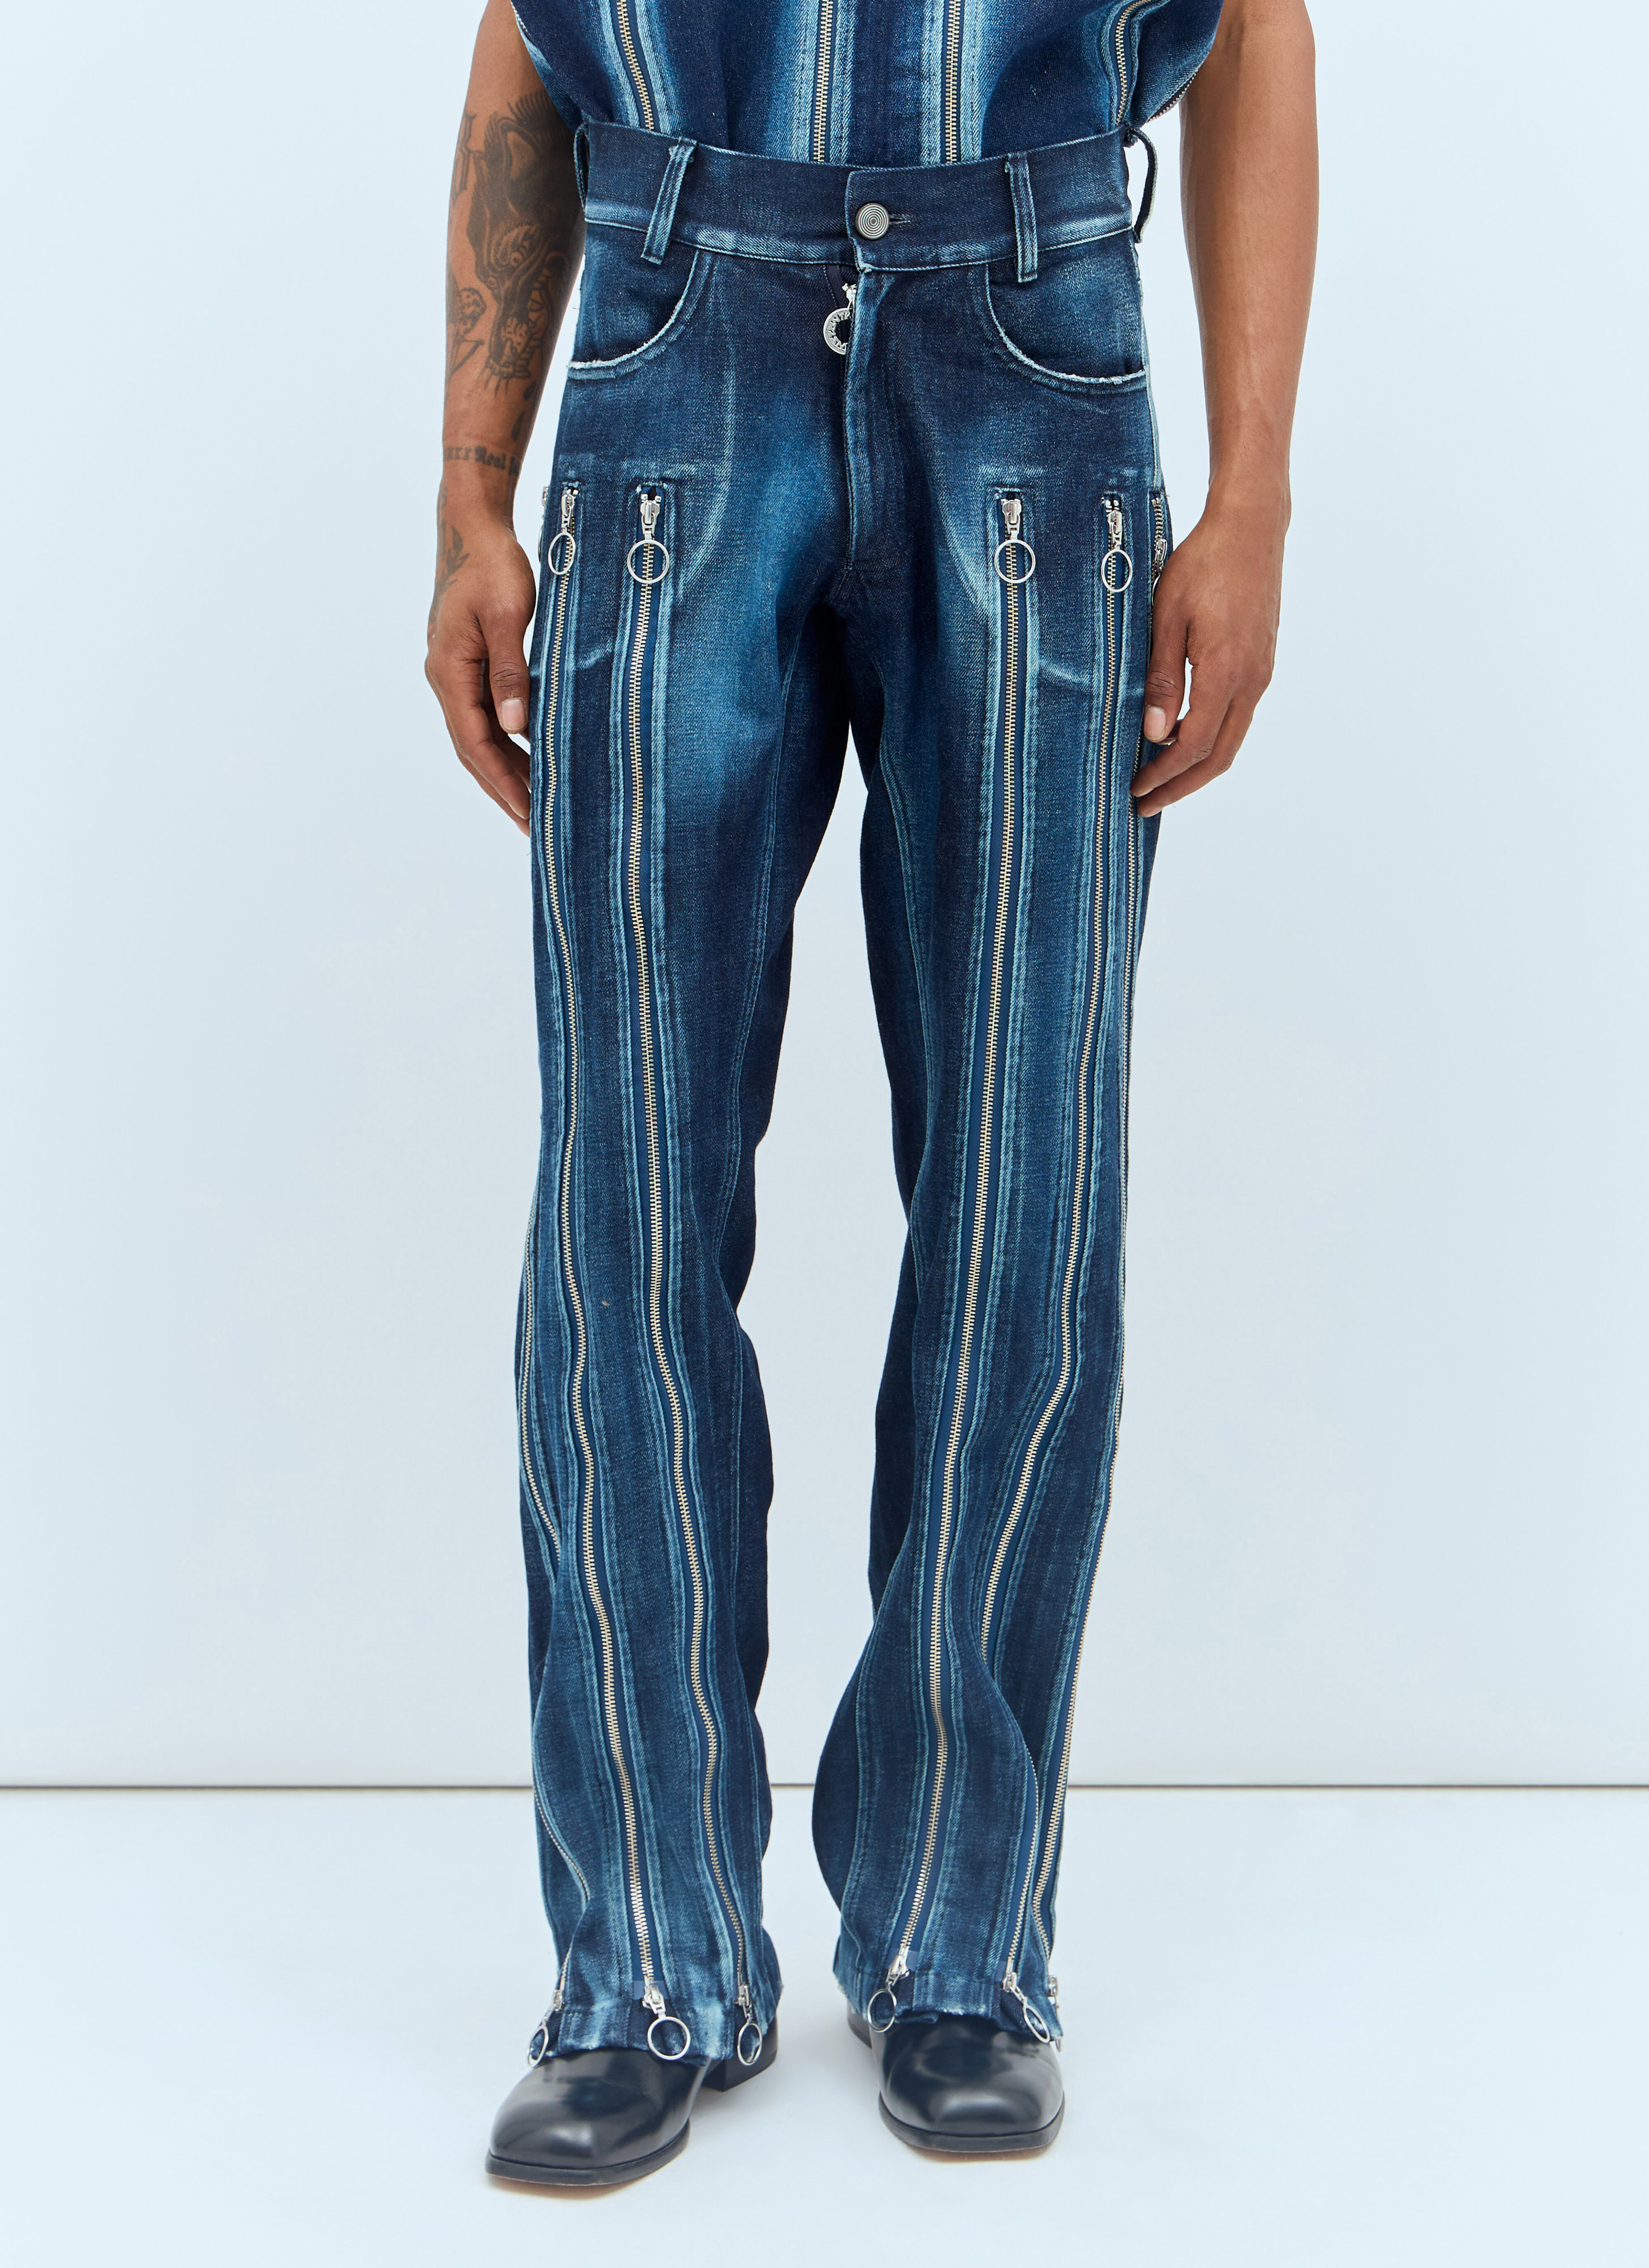 Jean Paul Gaultier Adjustable-Fit Zip Jeans Red jpg0157001